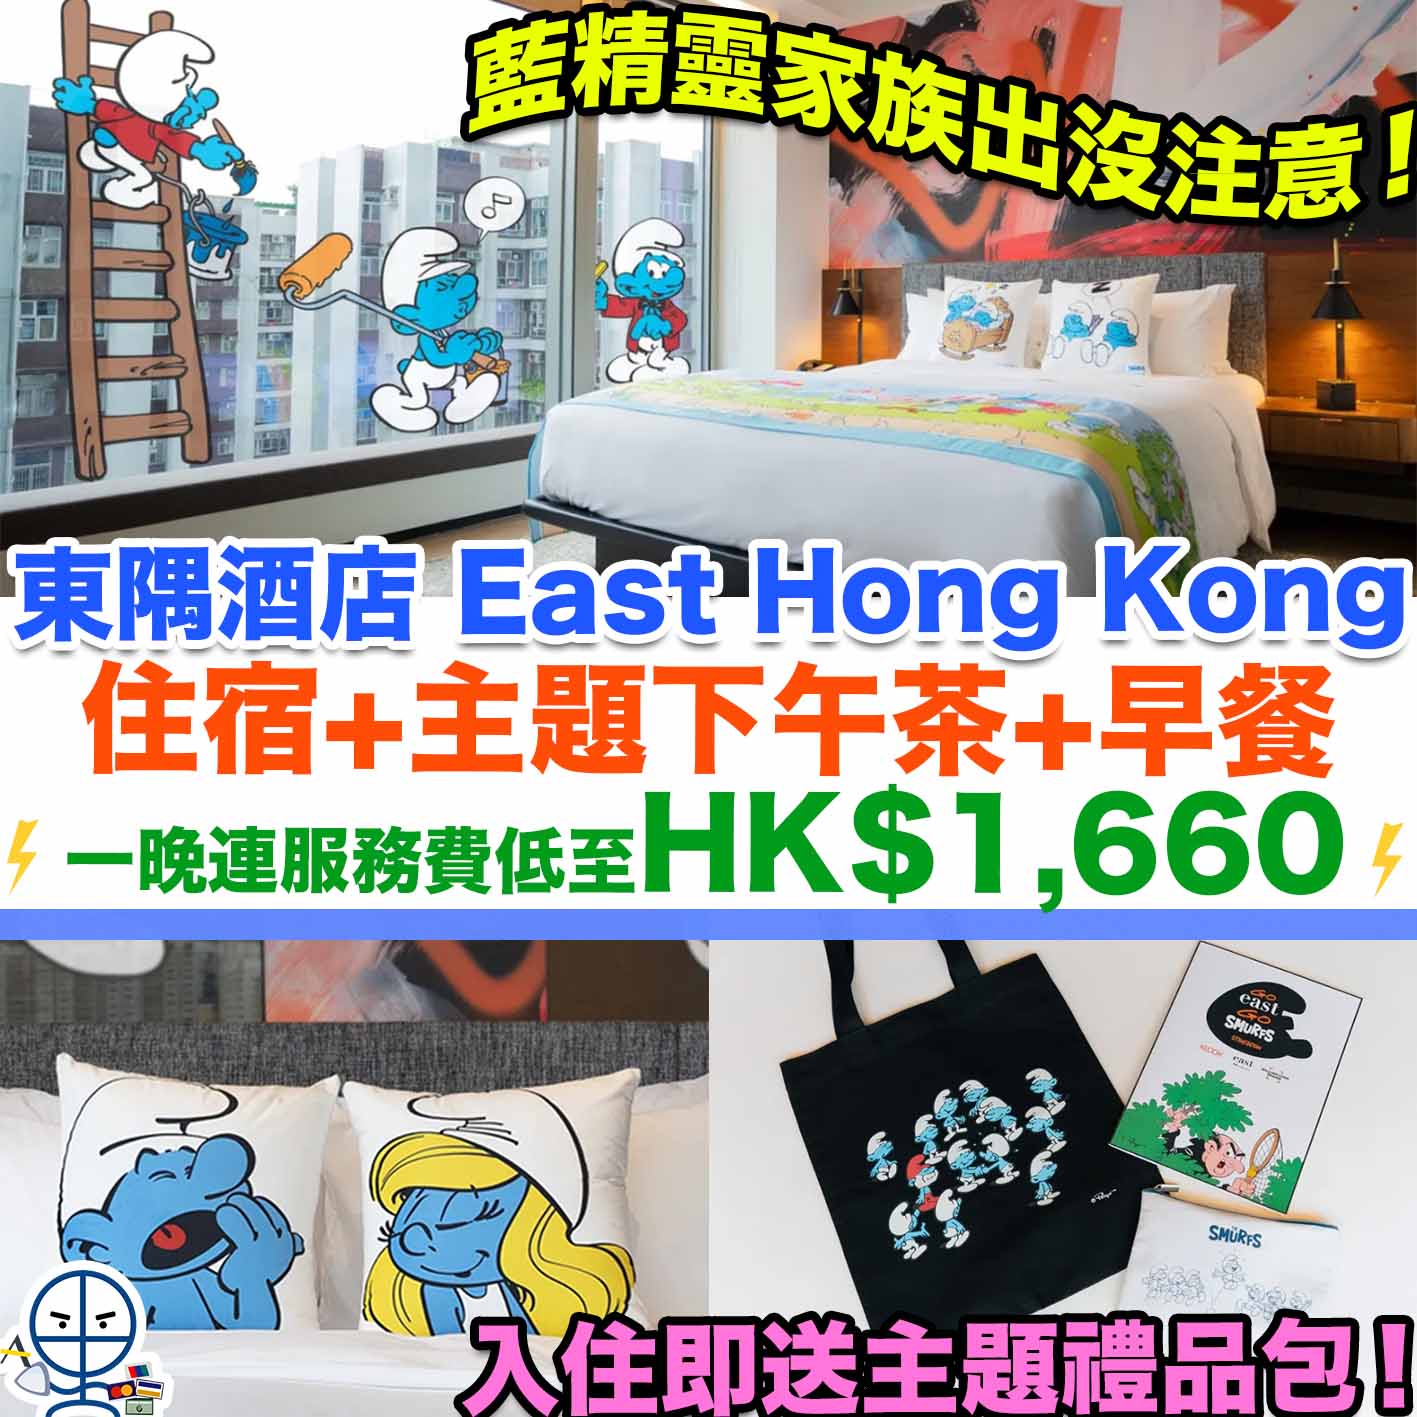 East Hong Kong, East Hotel,香港東隅酒店，打卡，酒店優惠，staycation ，本地旅遊